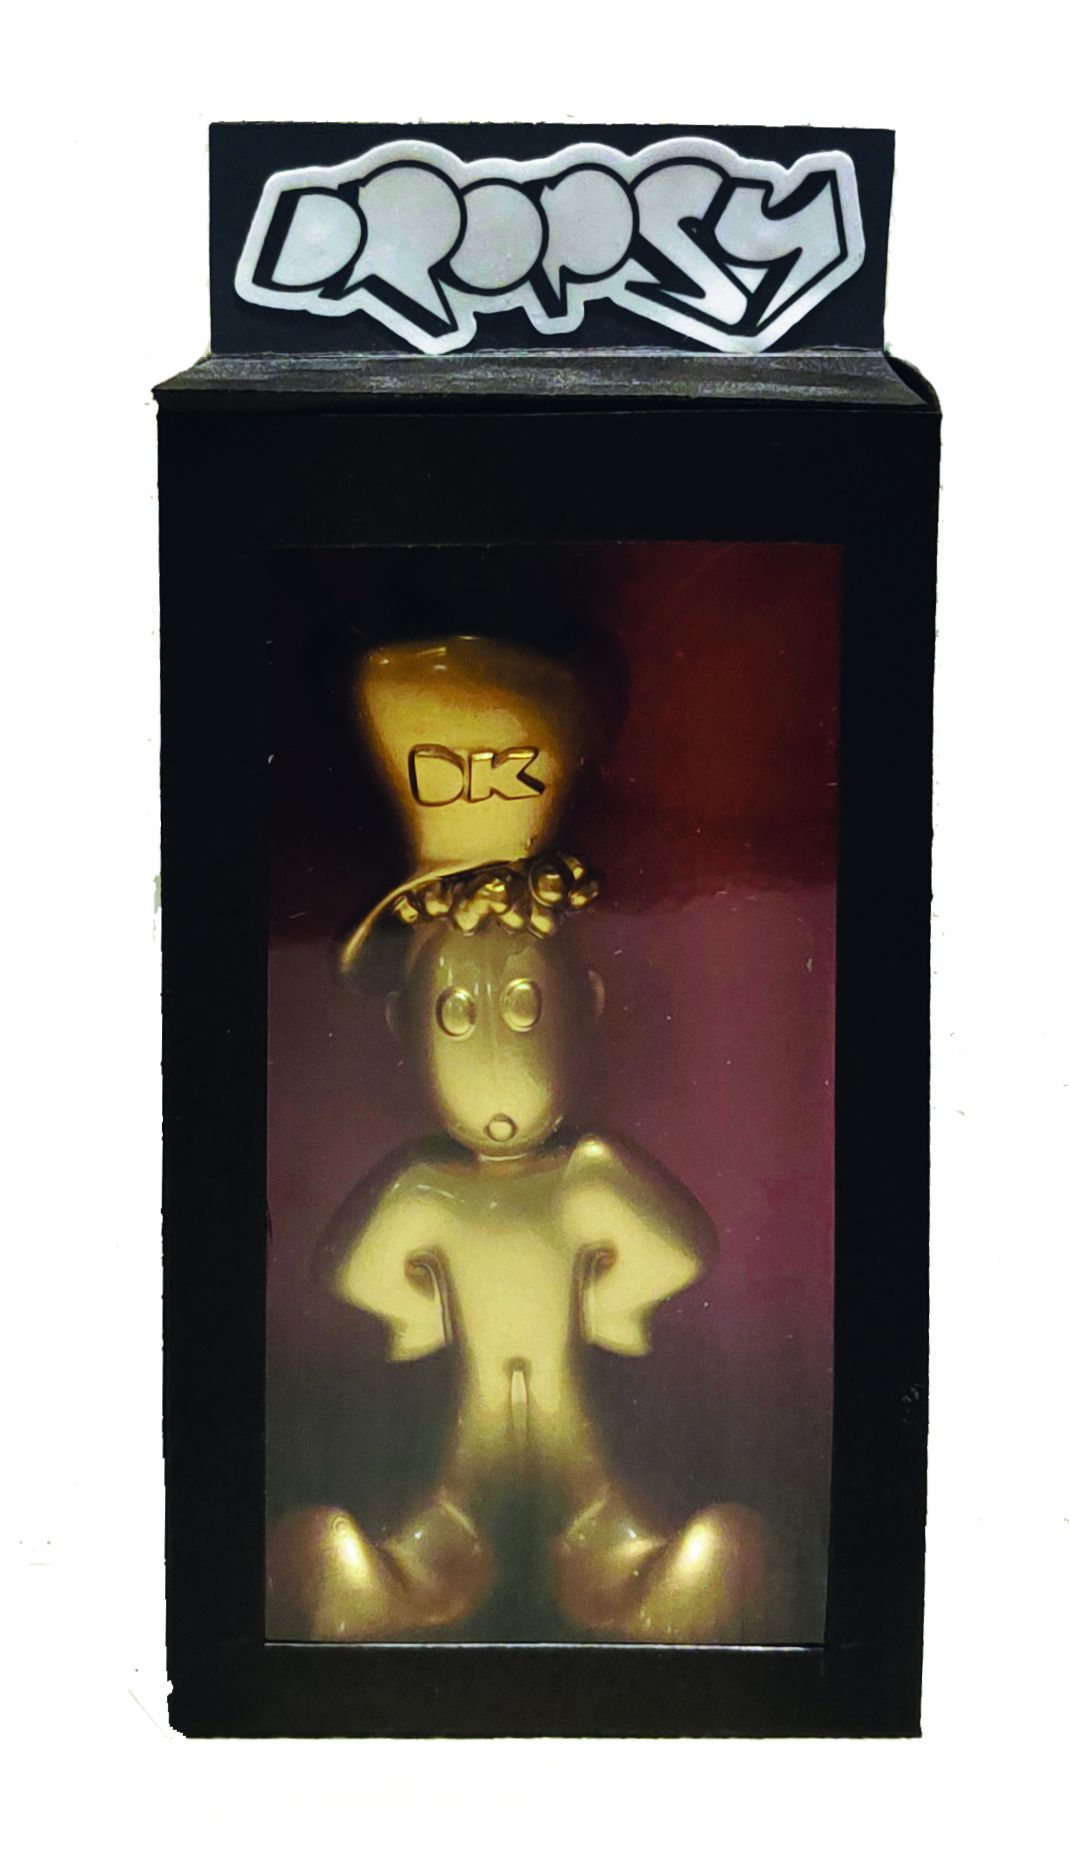 STAMPA 3D IN RESINA  BY DROPSY ' DEVILS KILLA GOLD '  dimensioni L 5 x H 10 x P 5 cm.